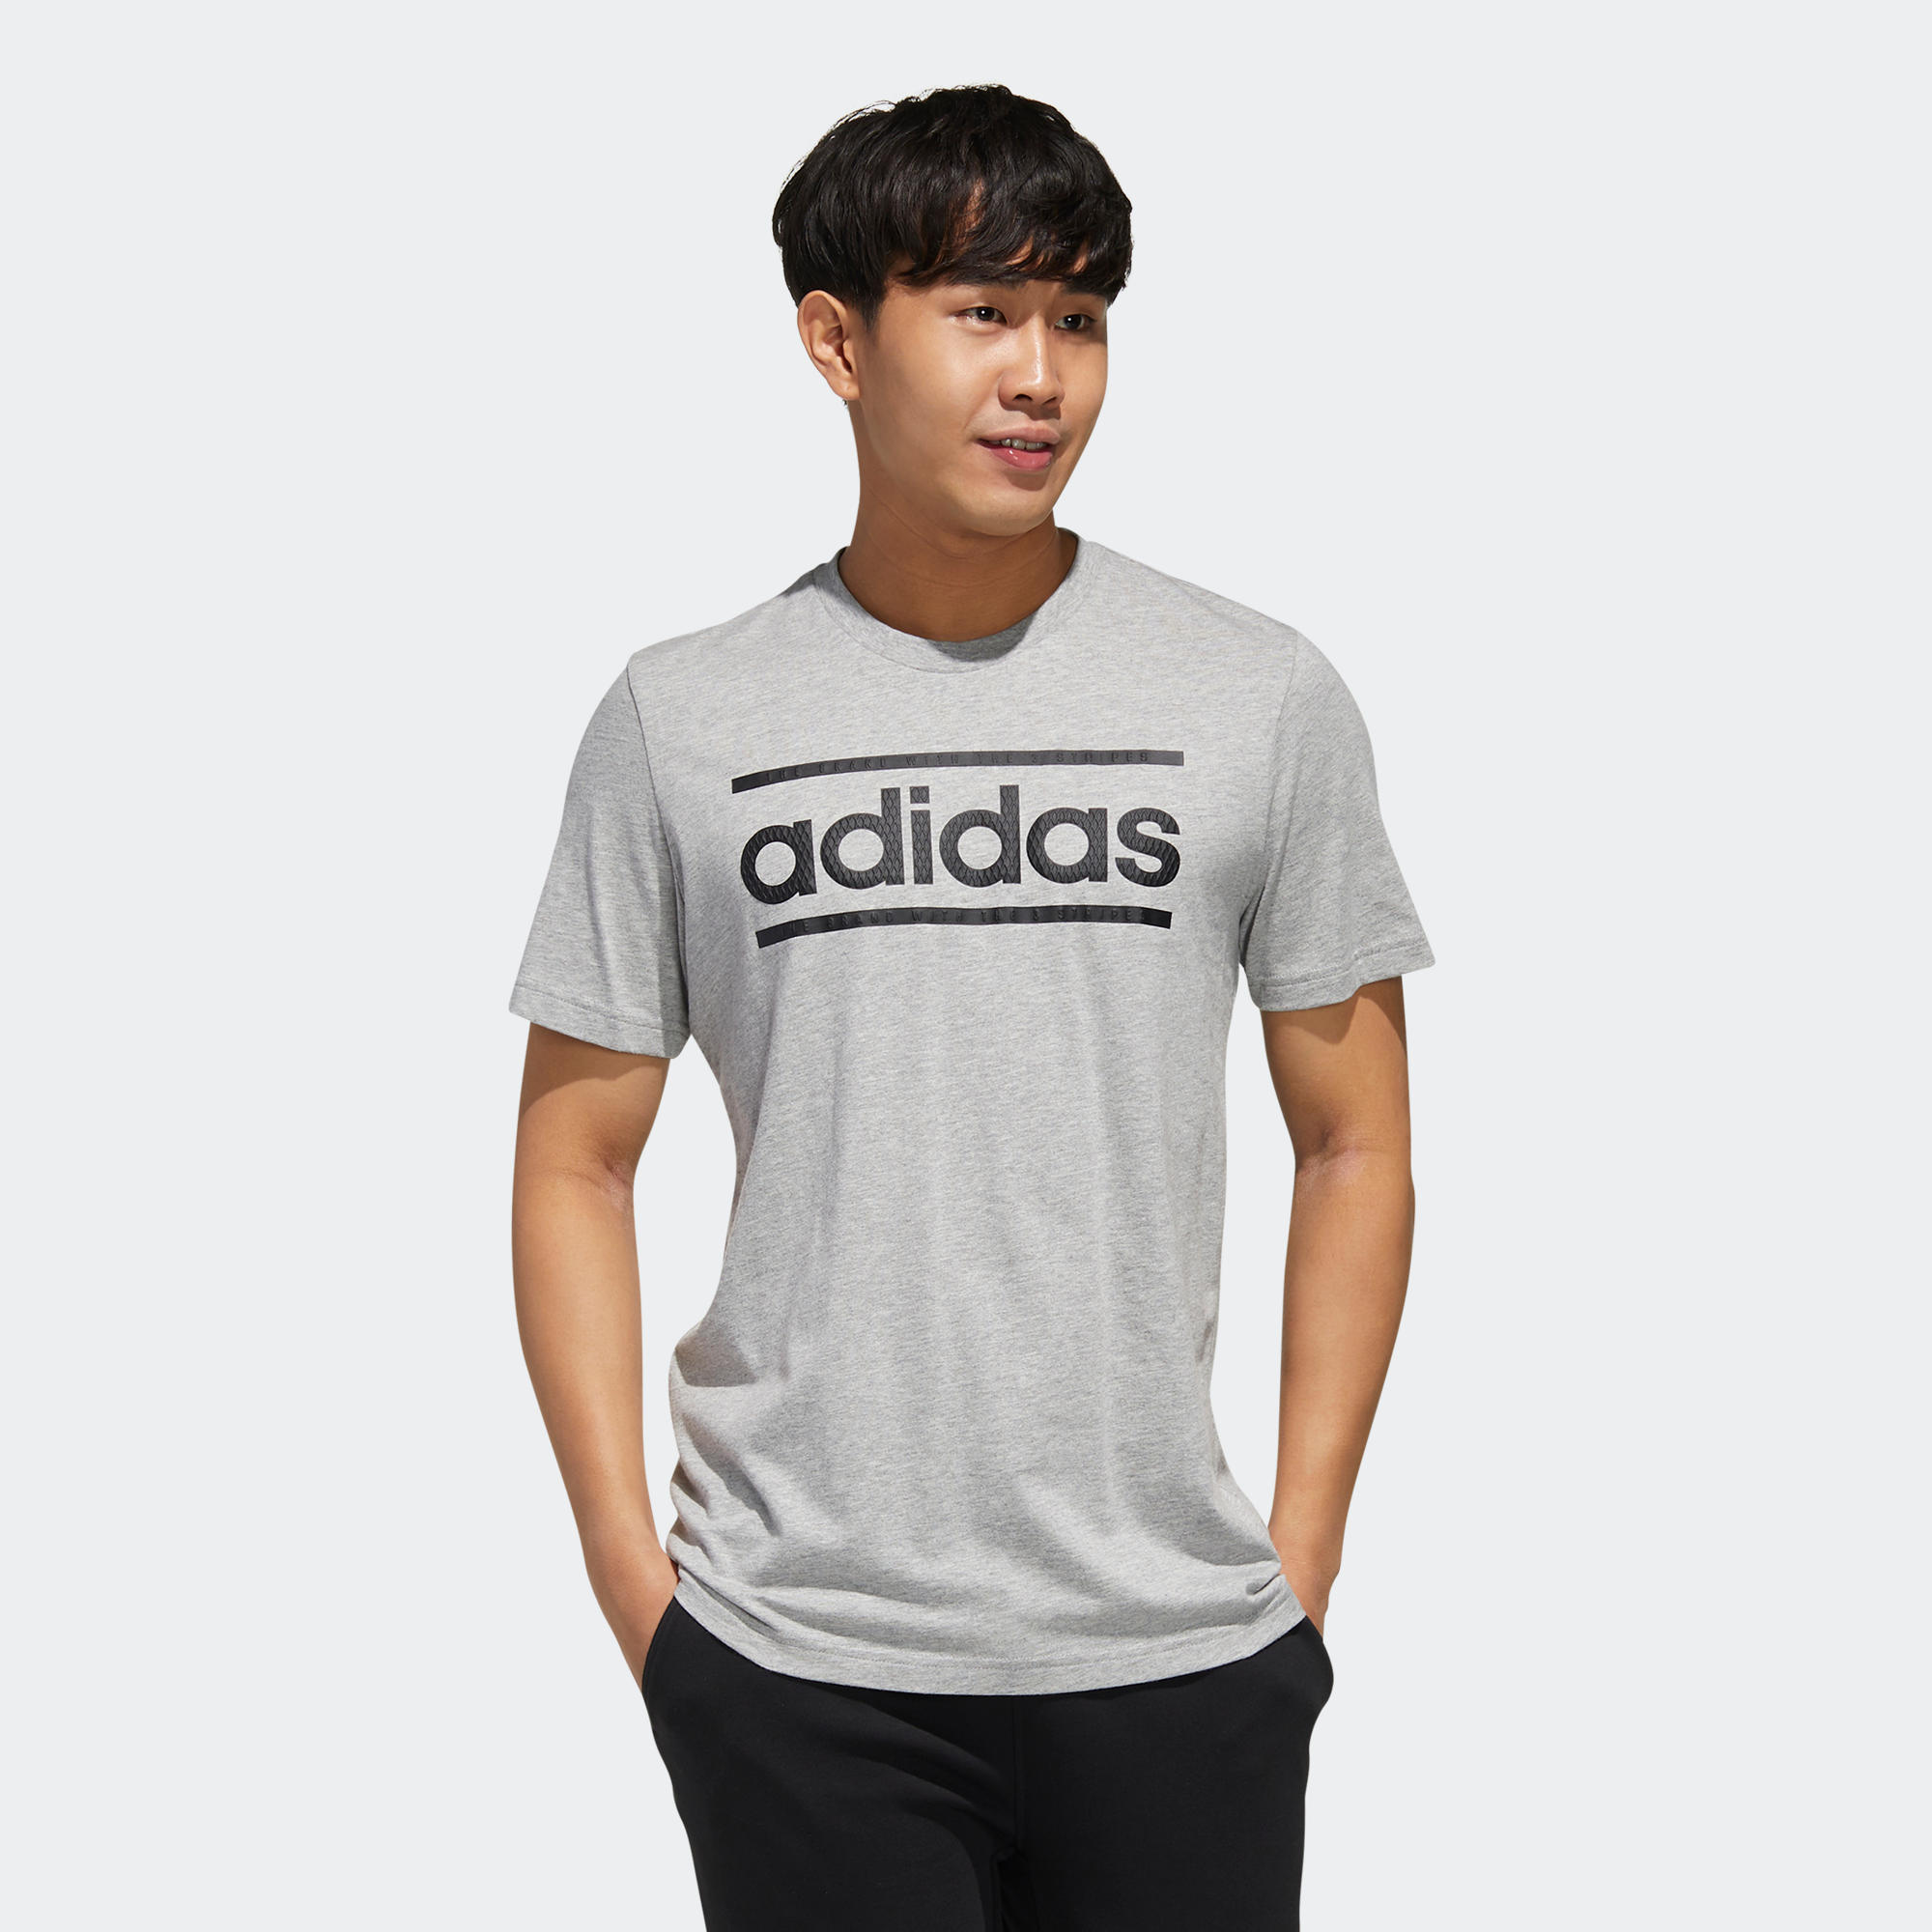 T-shirt Adidas uomo grigia con stampa ADIDAS | DECATHLON